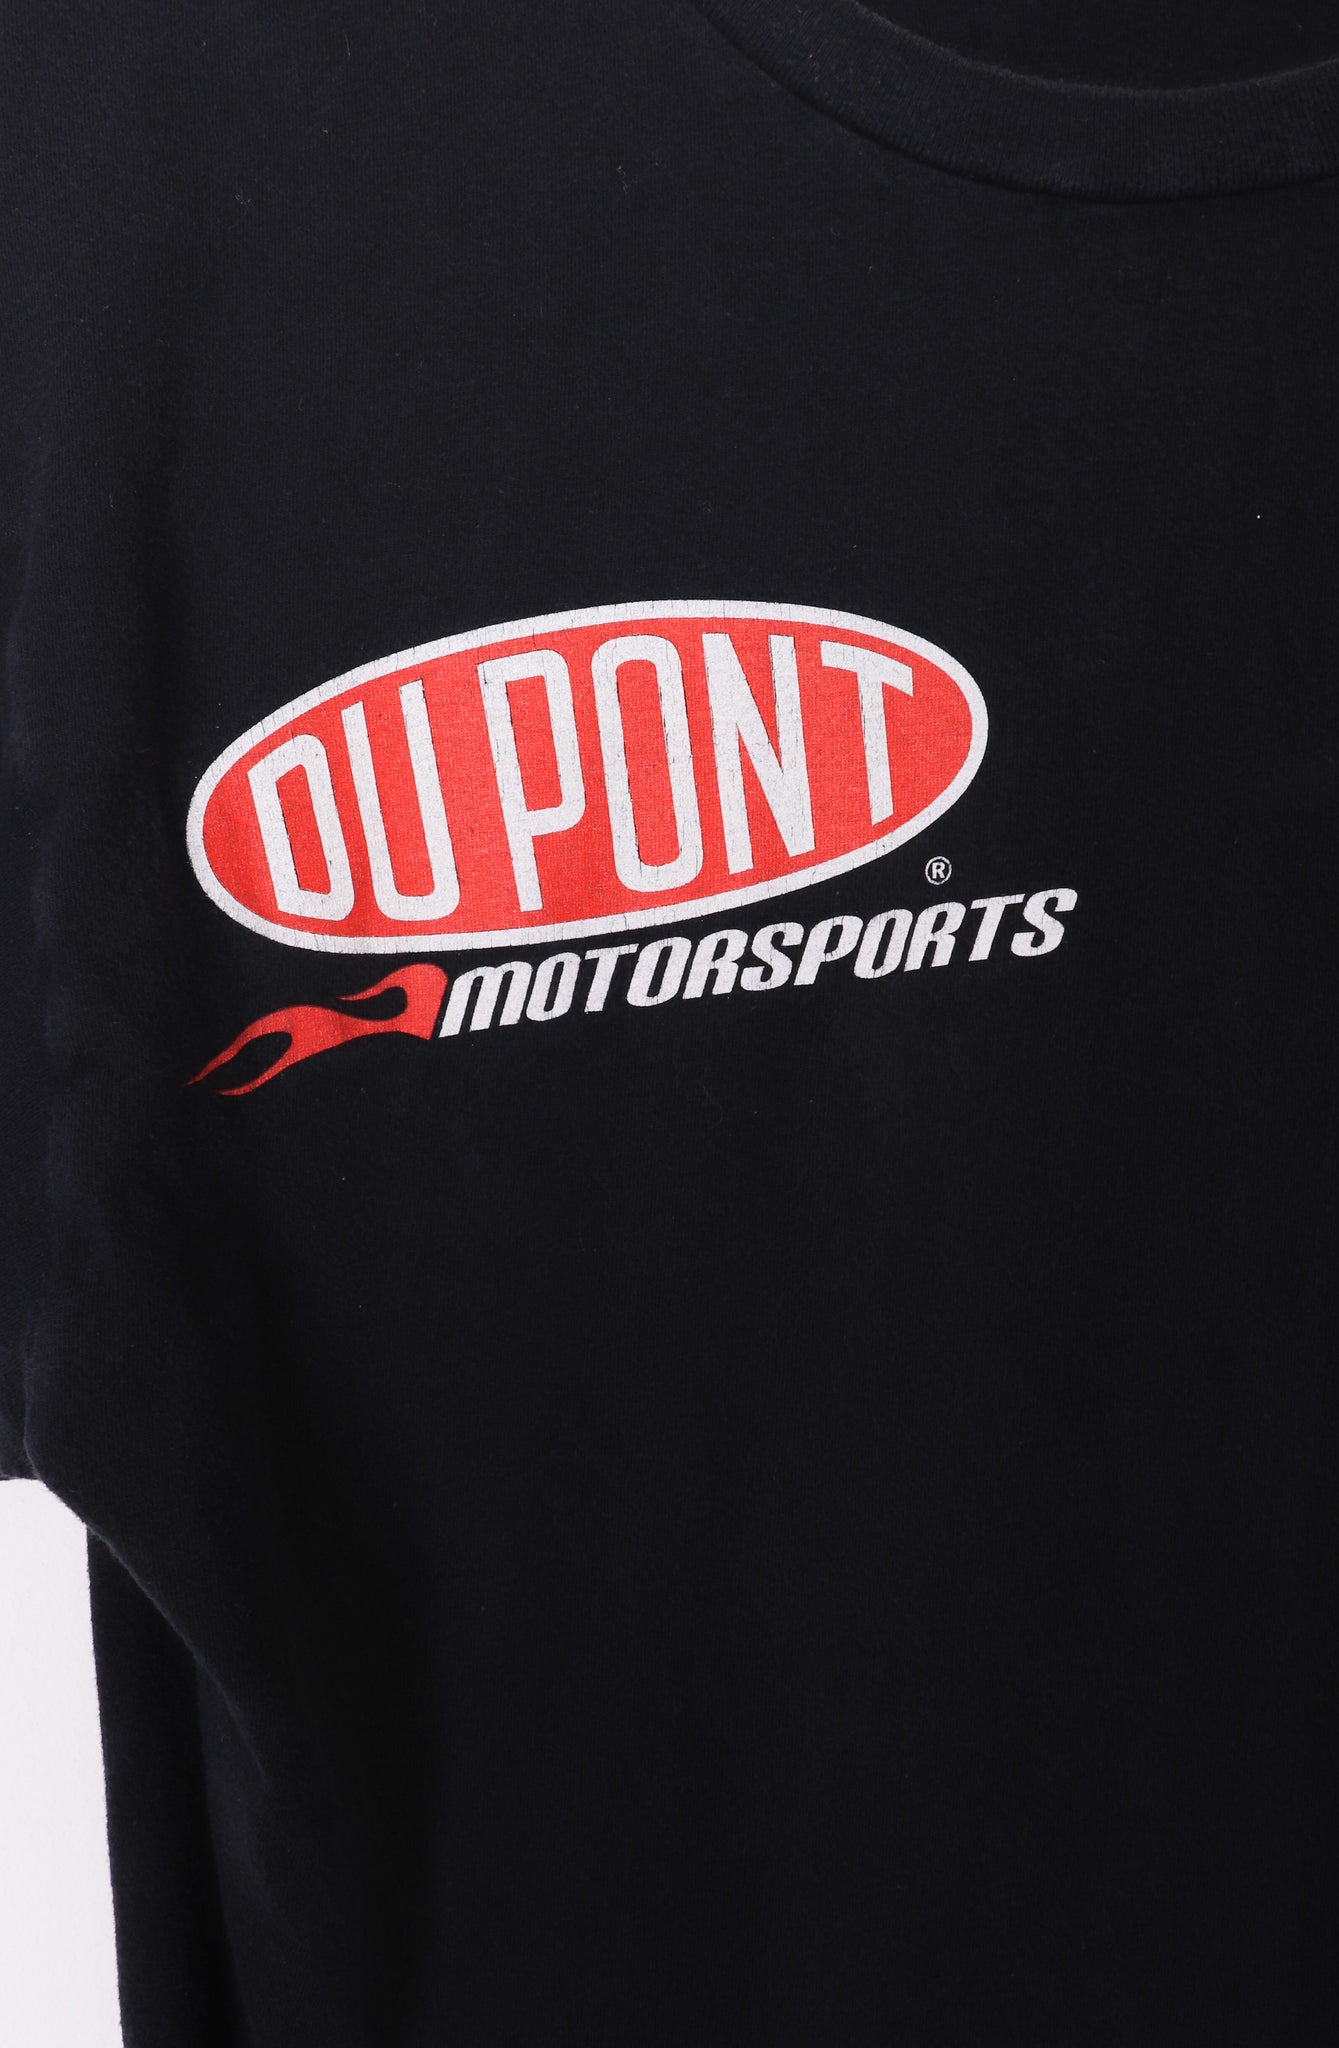 Chase Authentic's Du Pont Motorsports T-Shirt